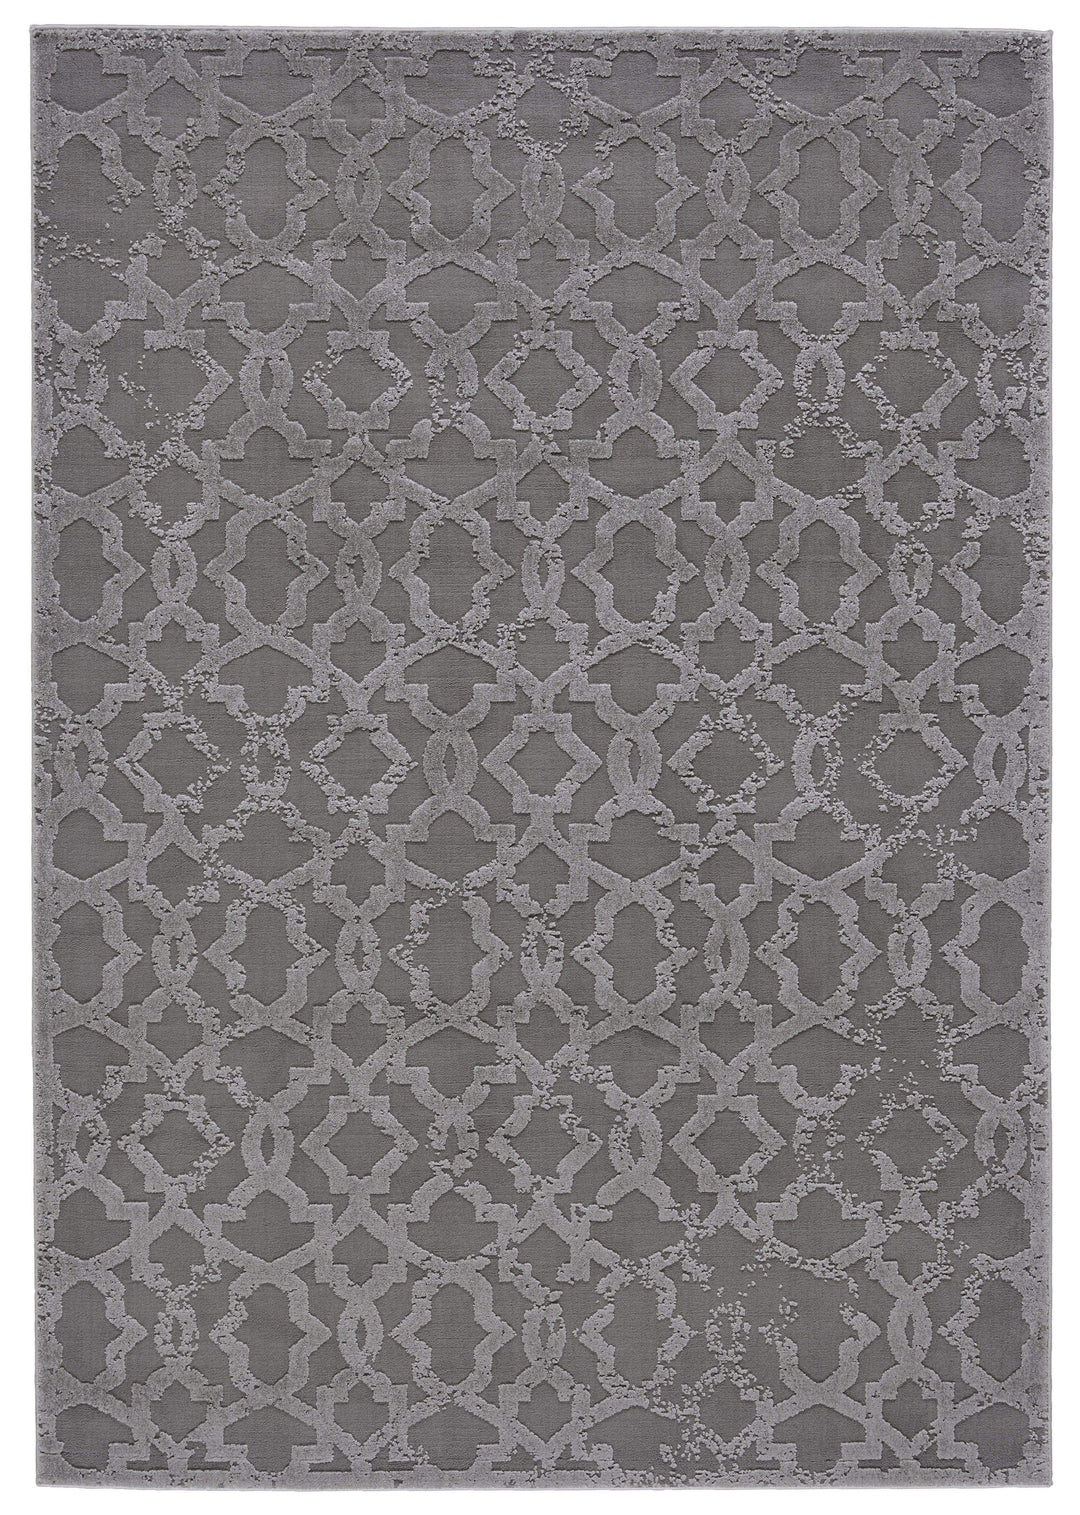 Feizy Feizy Akhari Trellis Pattern Rug - Available in 5 Sizes - Silver & Dark Gray 5' x 8' 6713675FSLV000E10